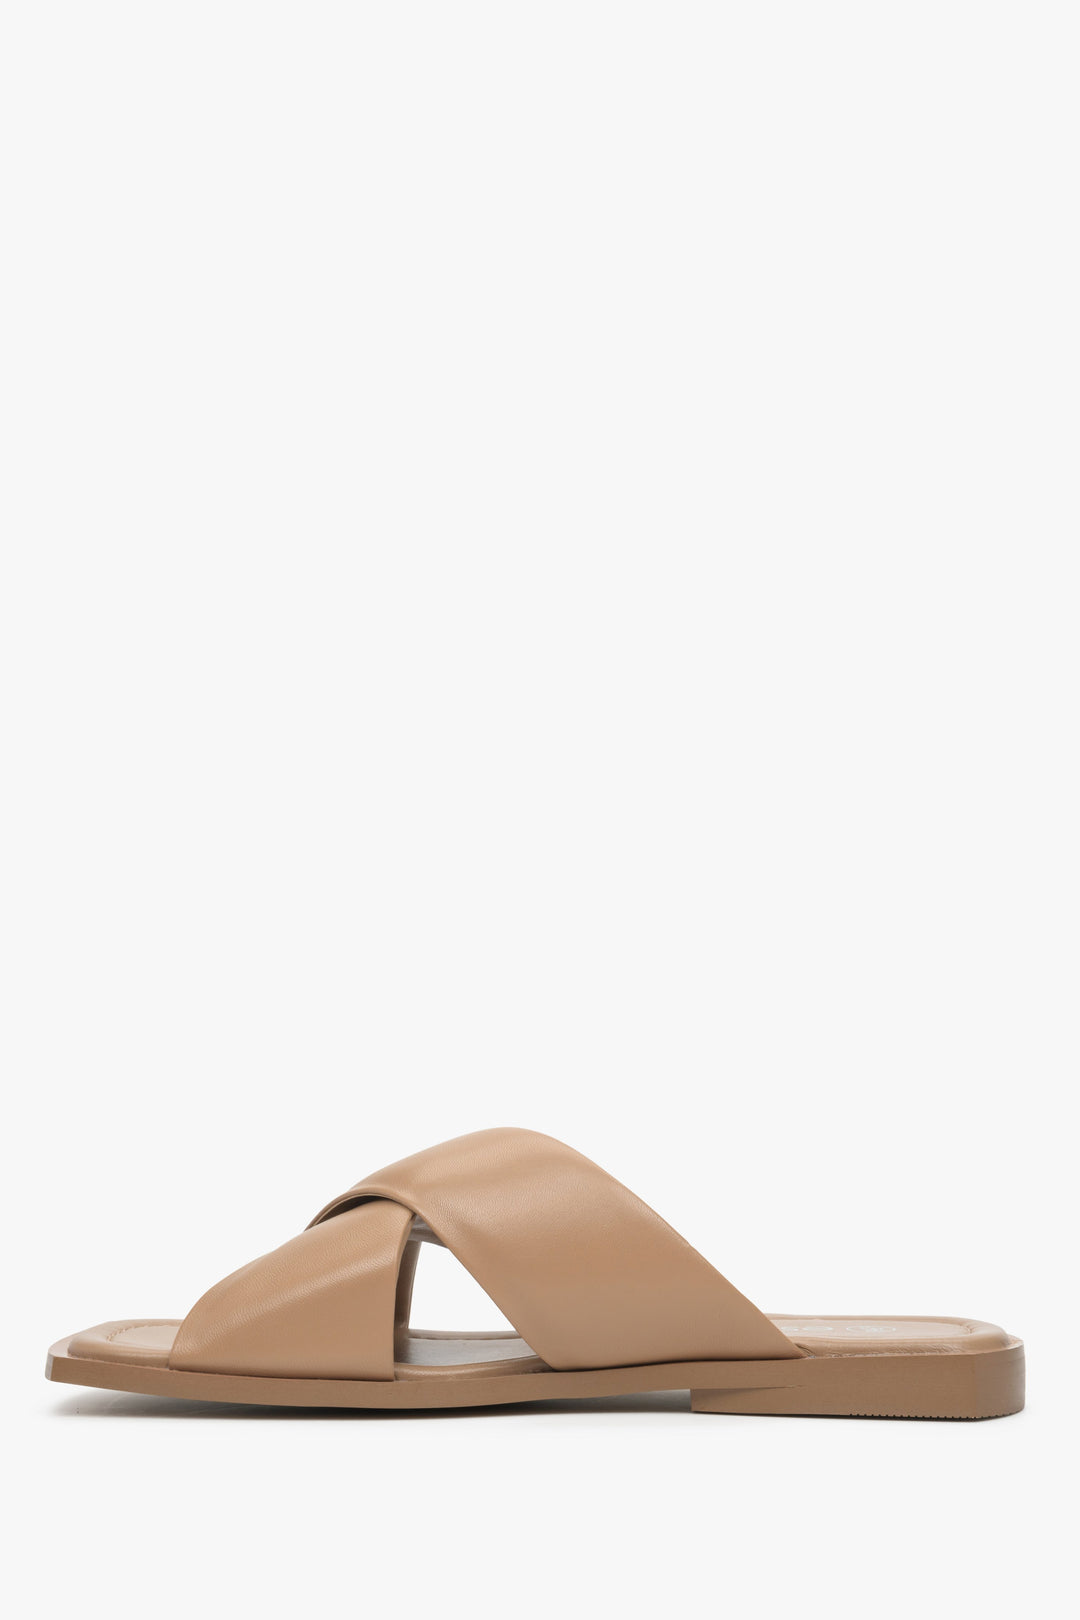 Estro women's slide sandals in light brown made of genuine leather - shoe profile.